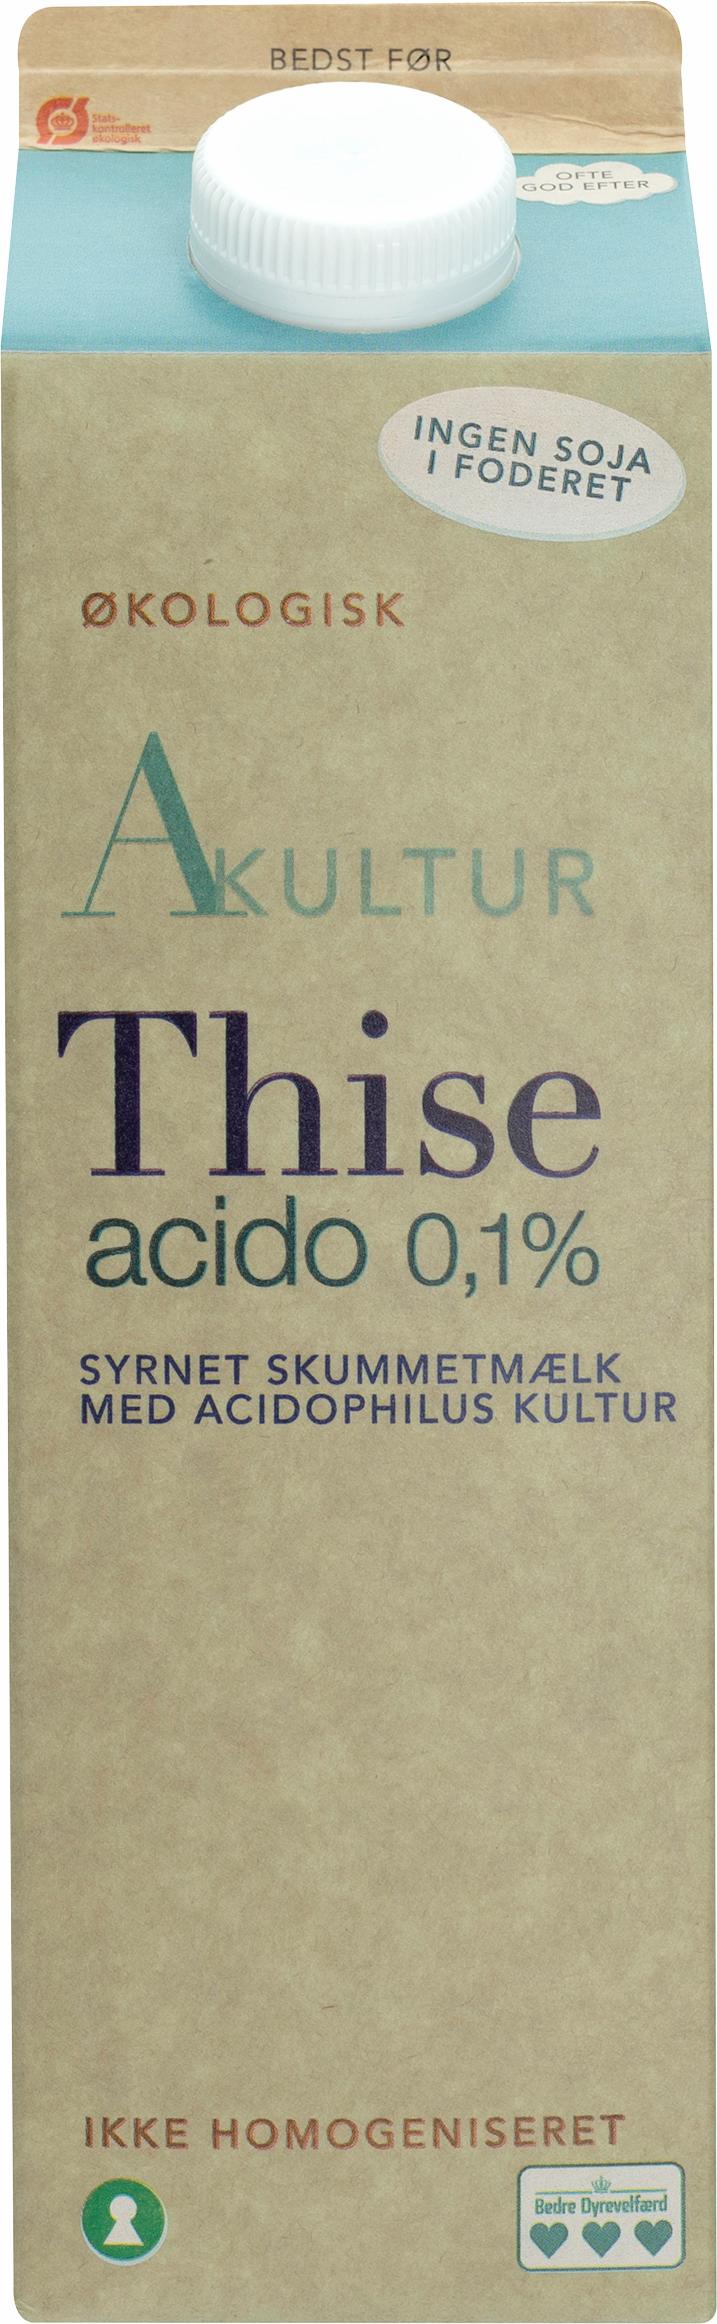 Thise Akultur Acido 0,1% 1000g